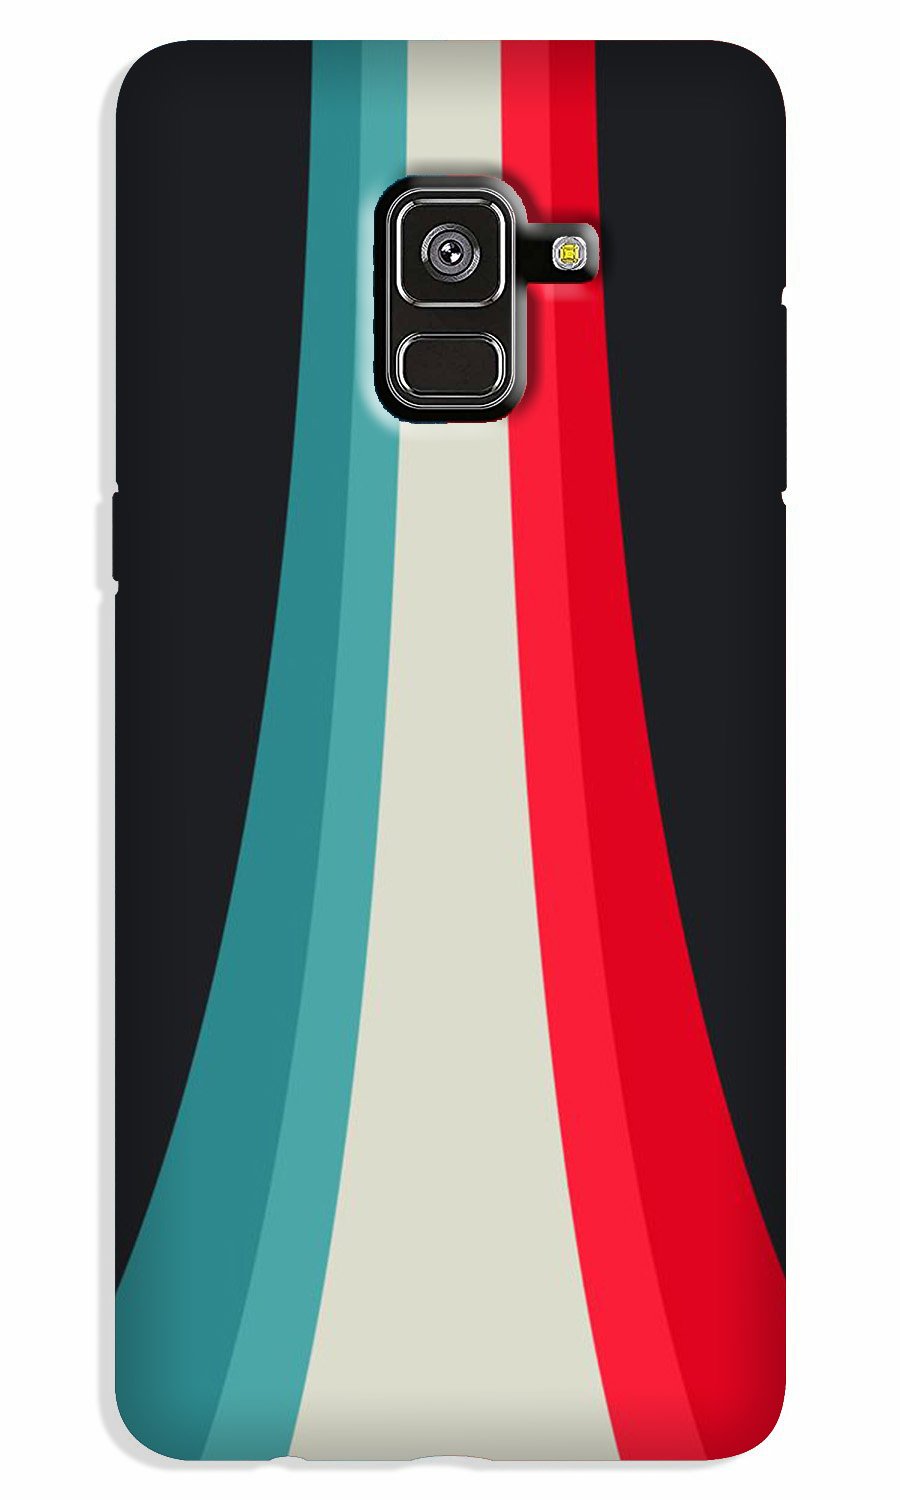 Slider Case for Galaxy A5 (2018) (Design - 189)